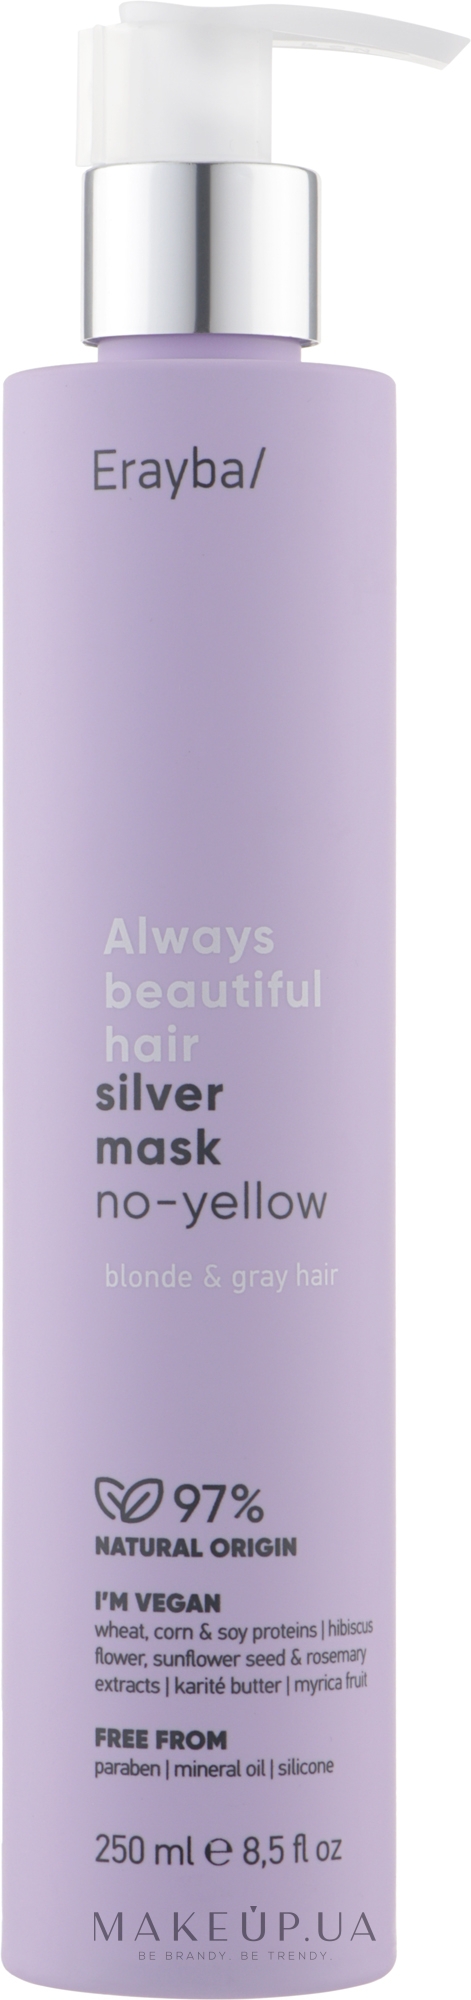 Маска для волос против желтизны - Erayba ABH Silver No-Yellow Mask  — фото 250ml